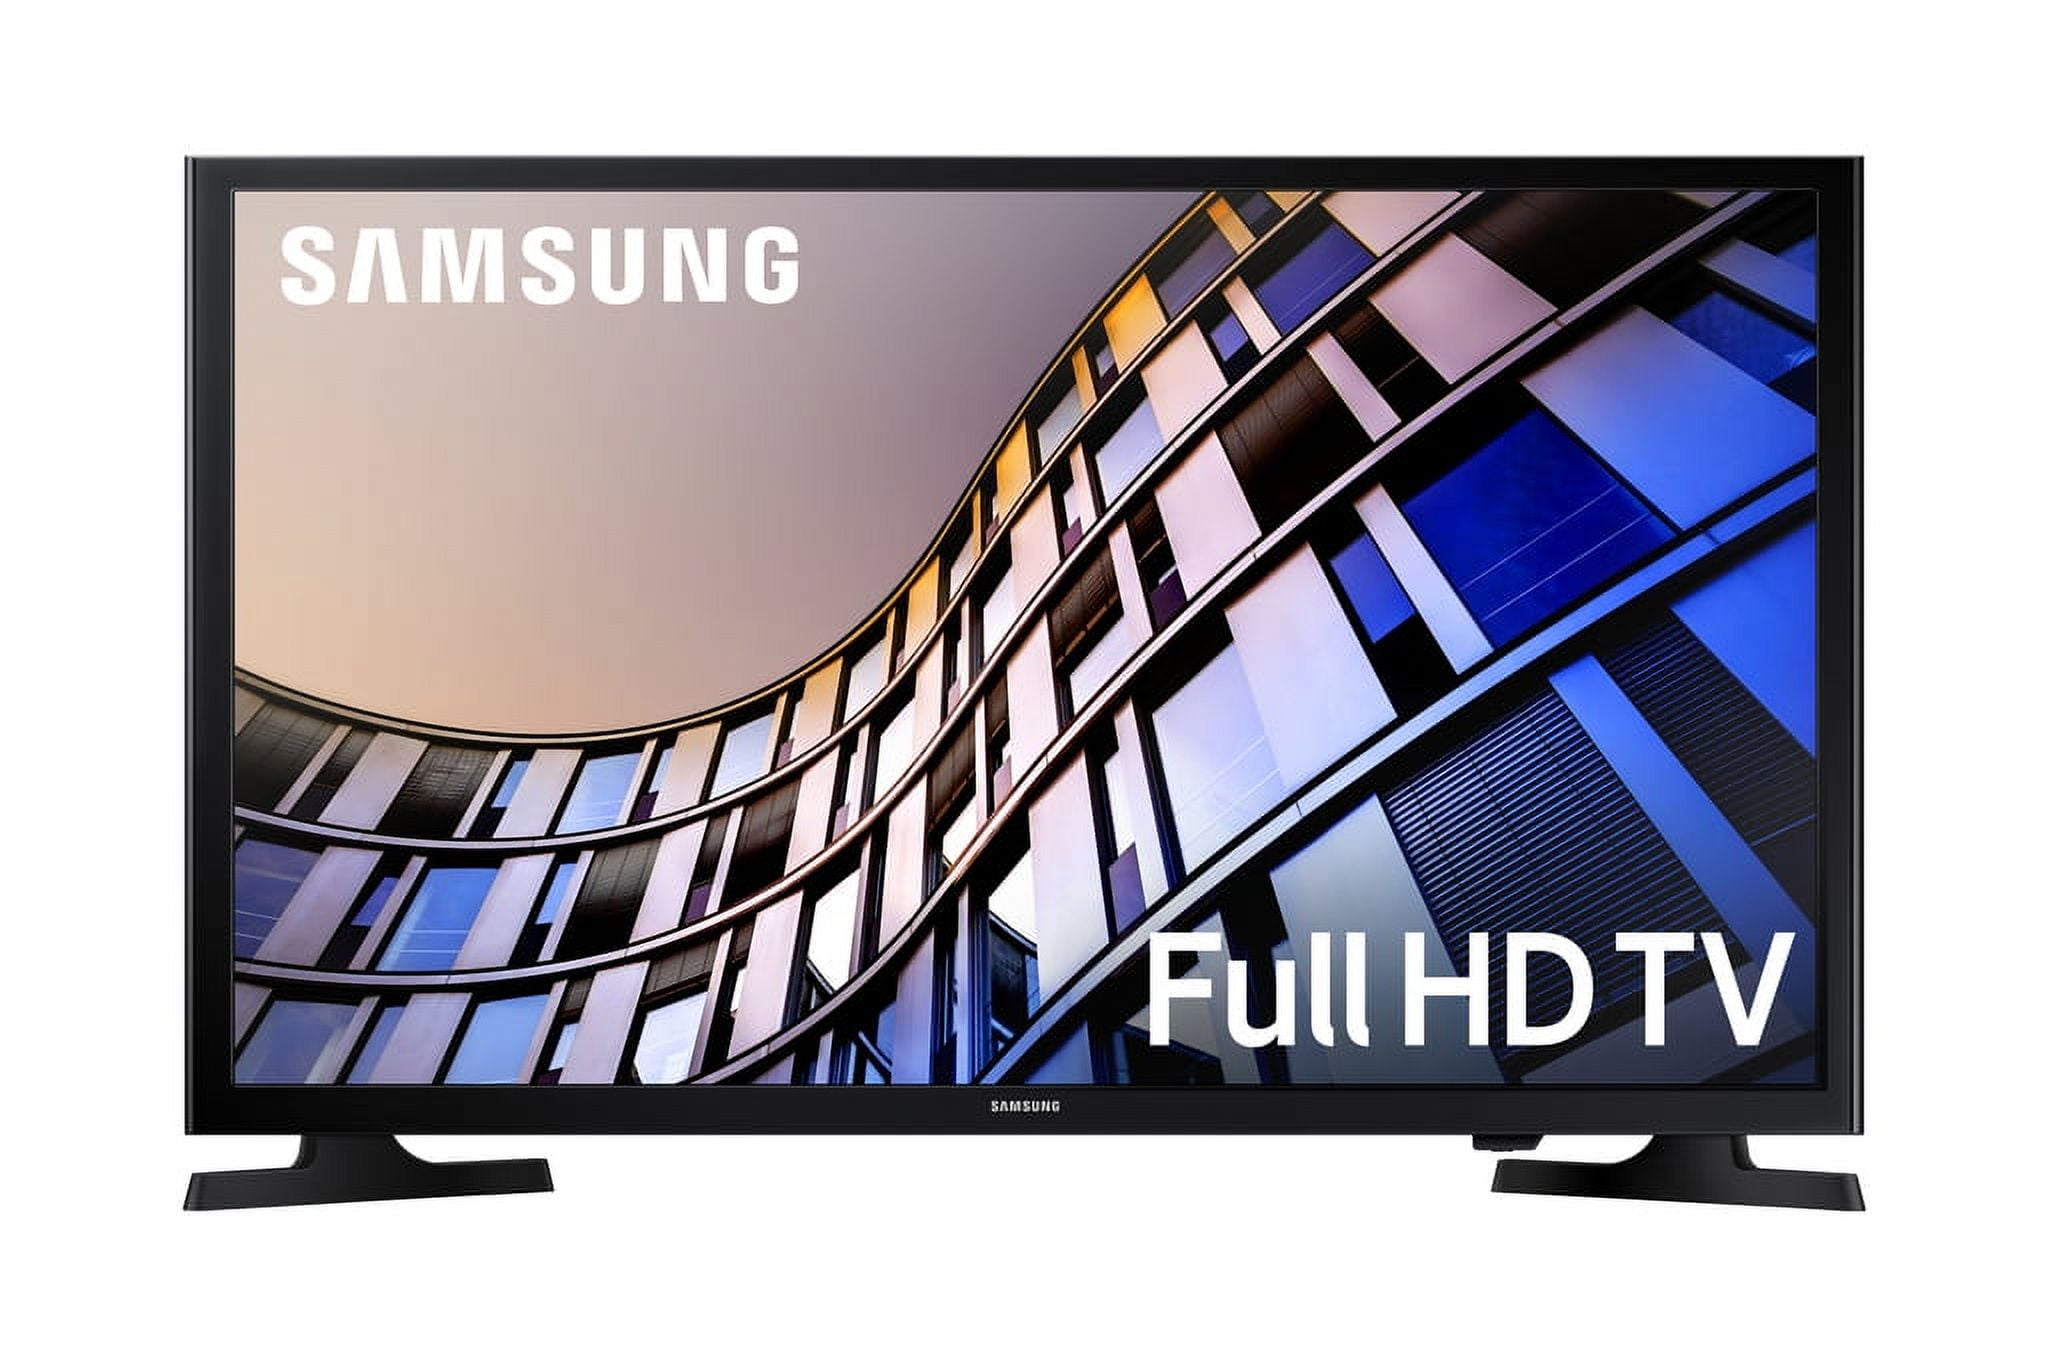 SAMSUNG 32 Class HD (720P) Smart LED TV UN32M4500 